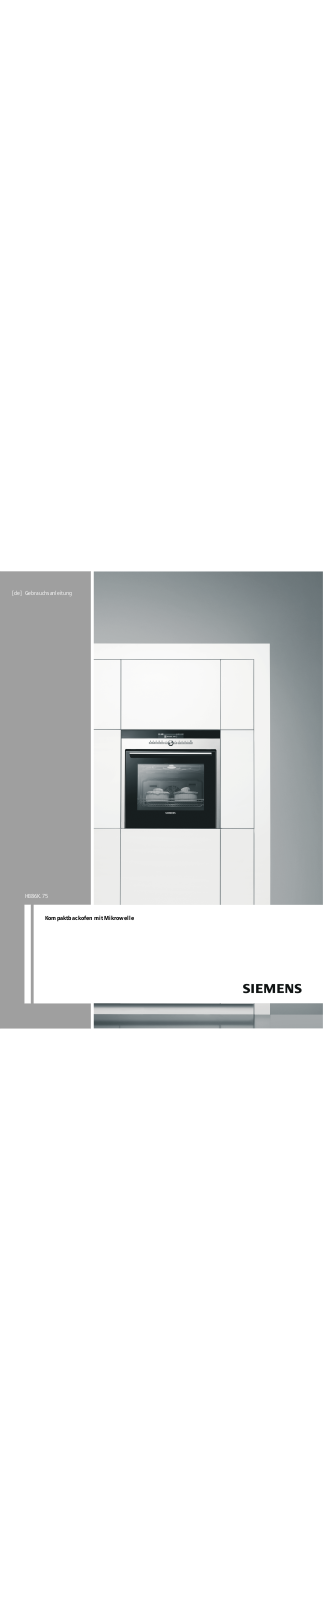 Siemens HB86K575 User Manual